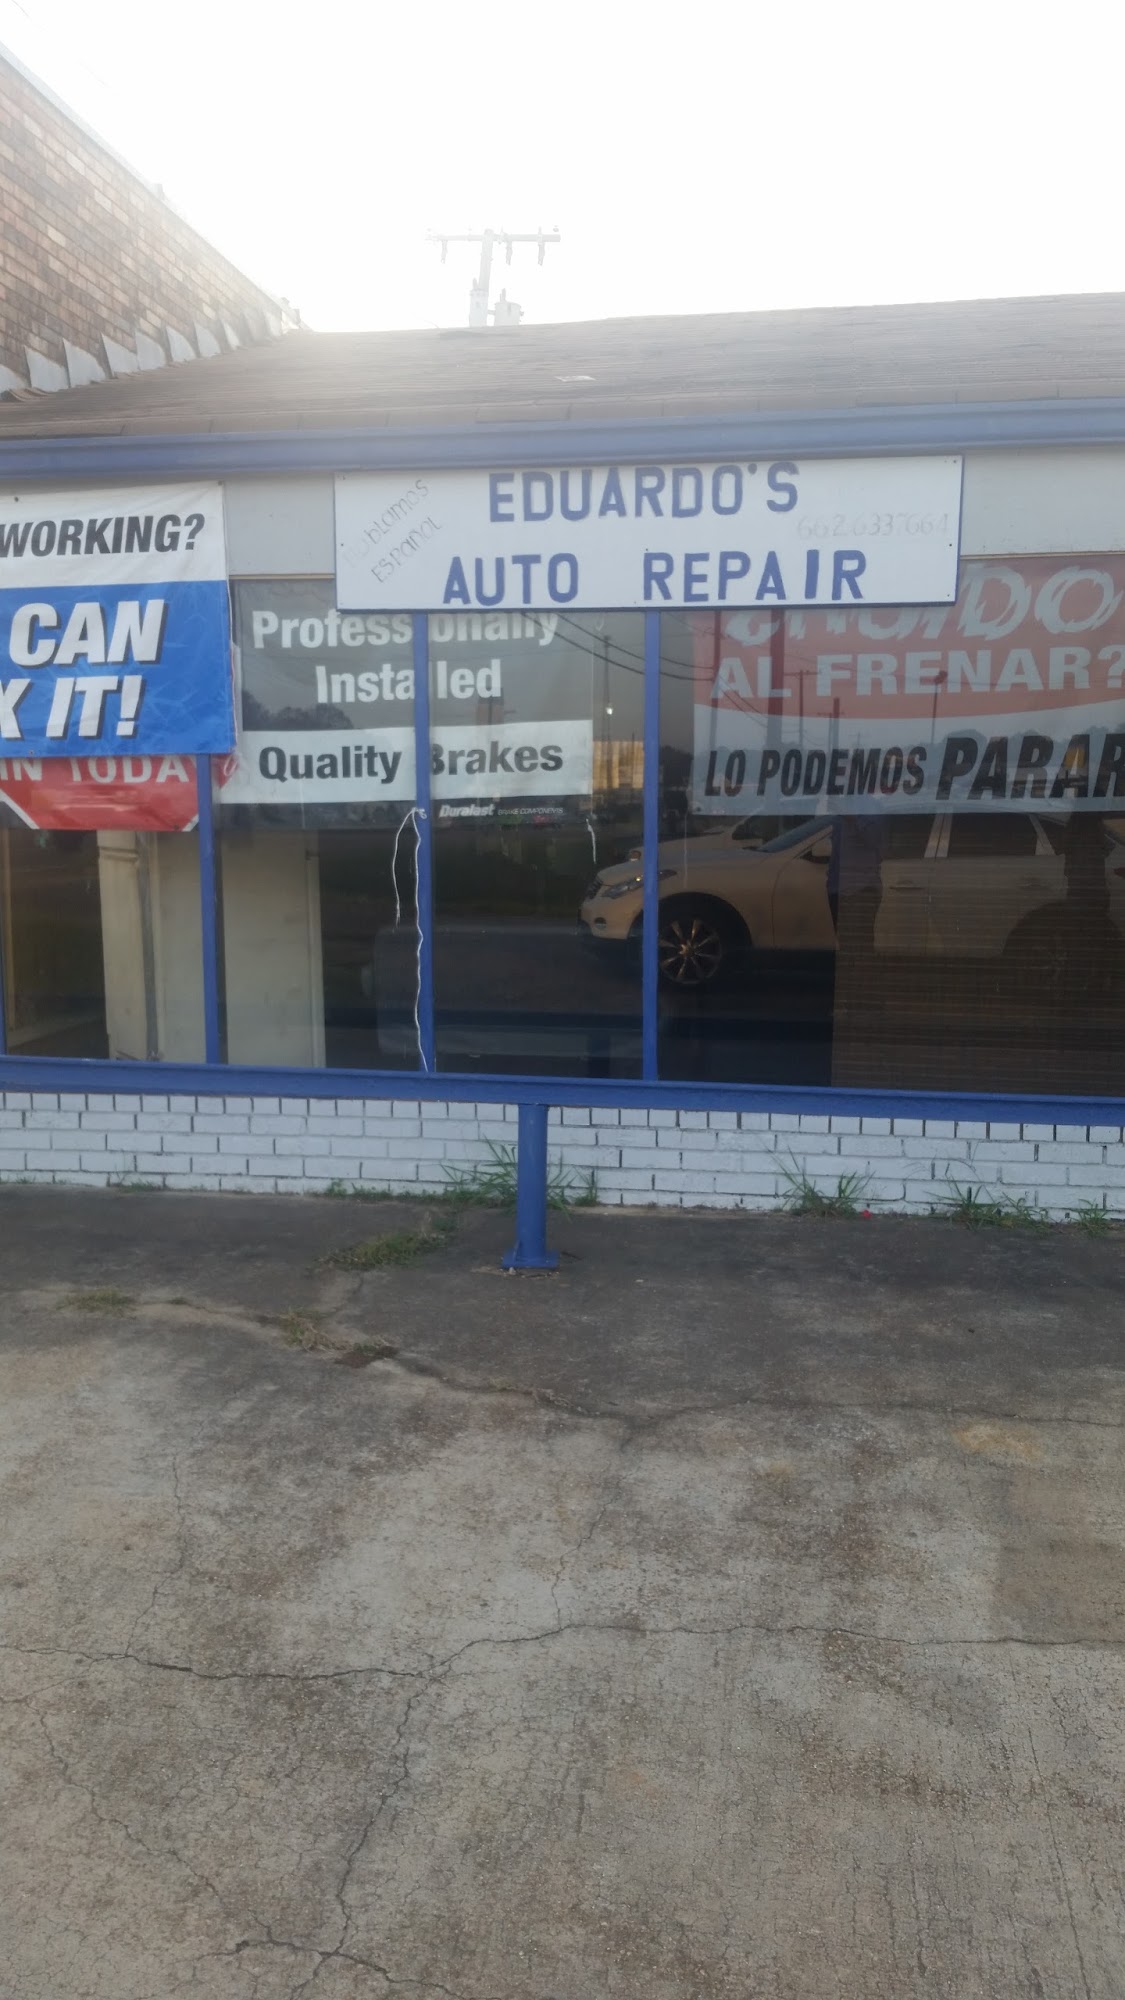 Eduardos's Auto Repair